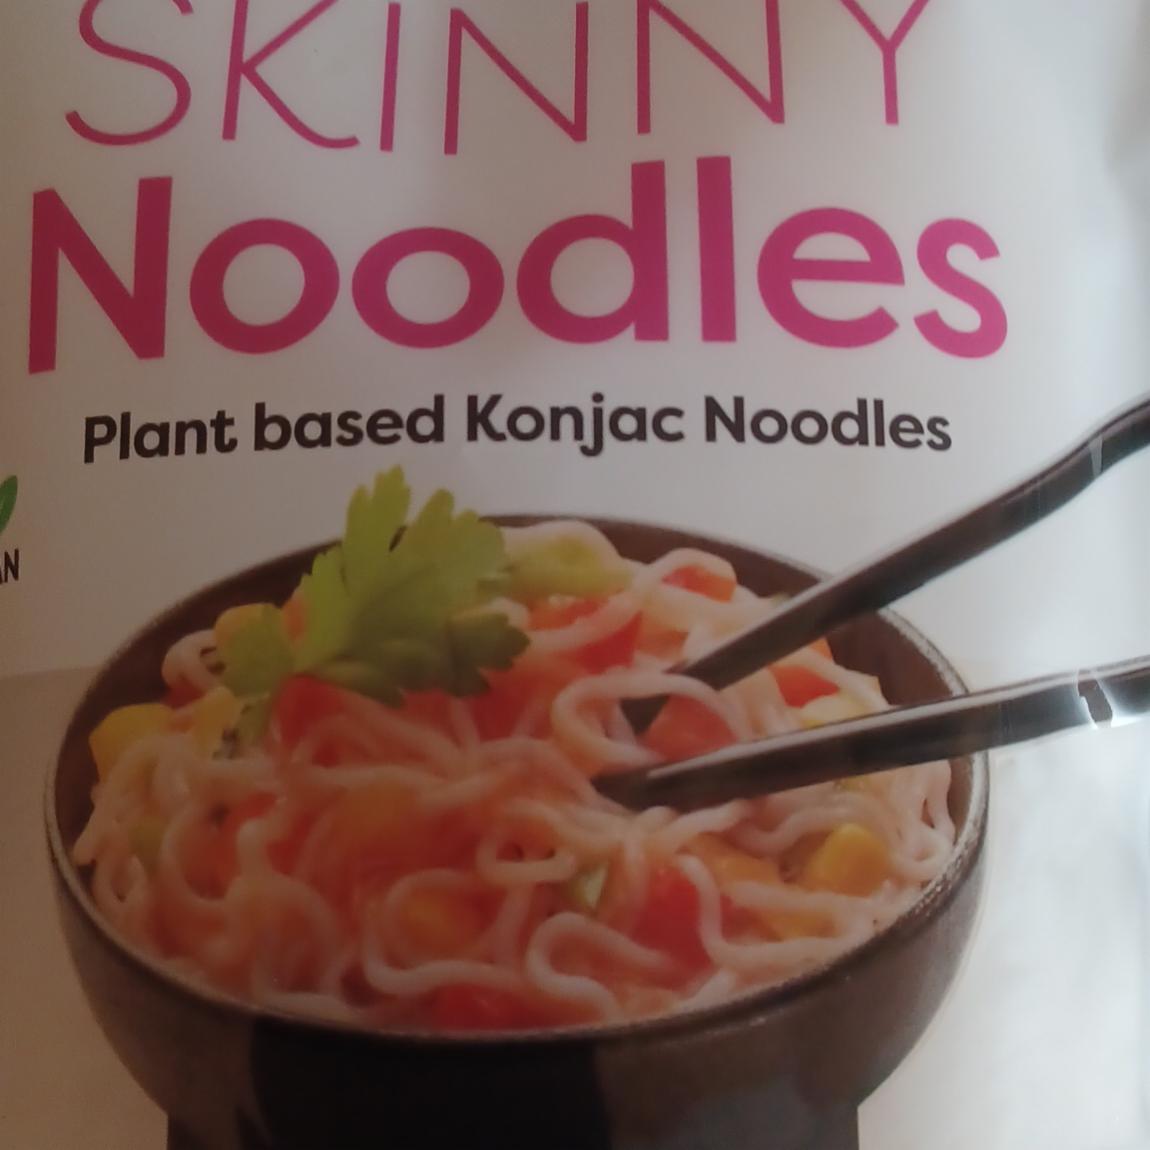 Fotografie - Yumsu skinny noodles plant based konjac noodles